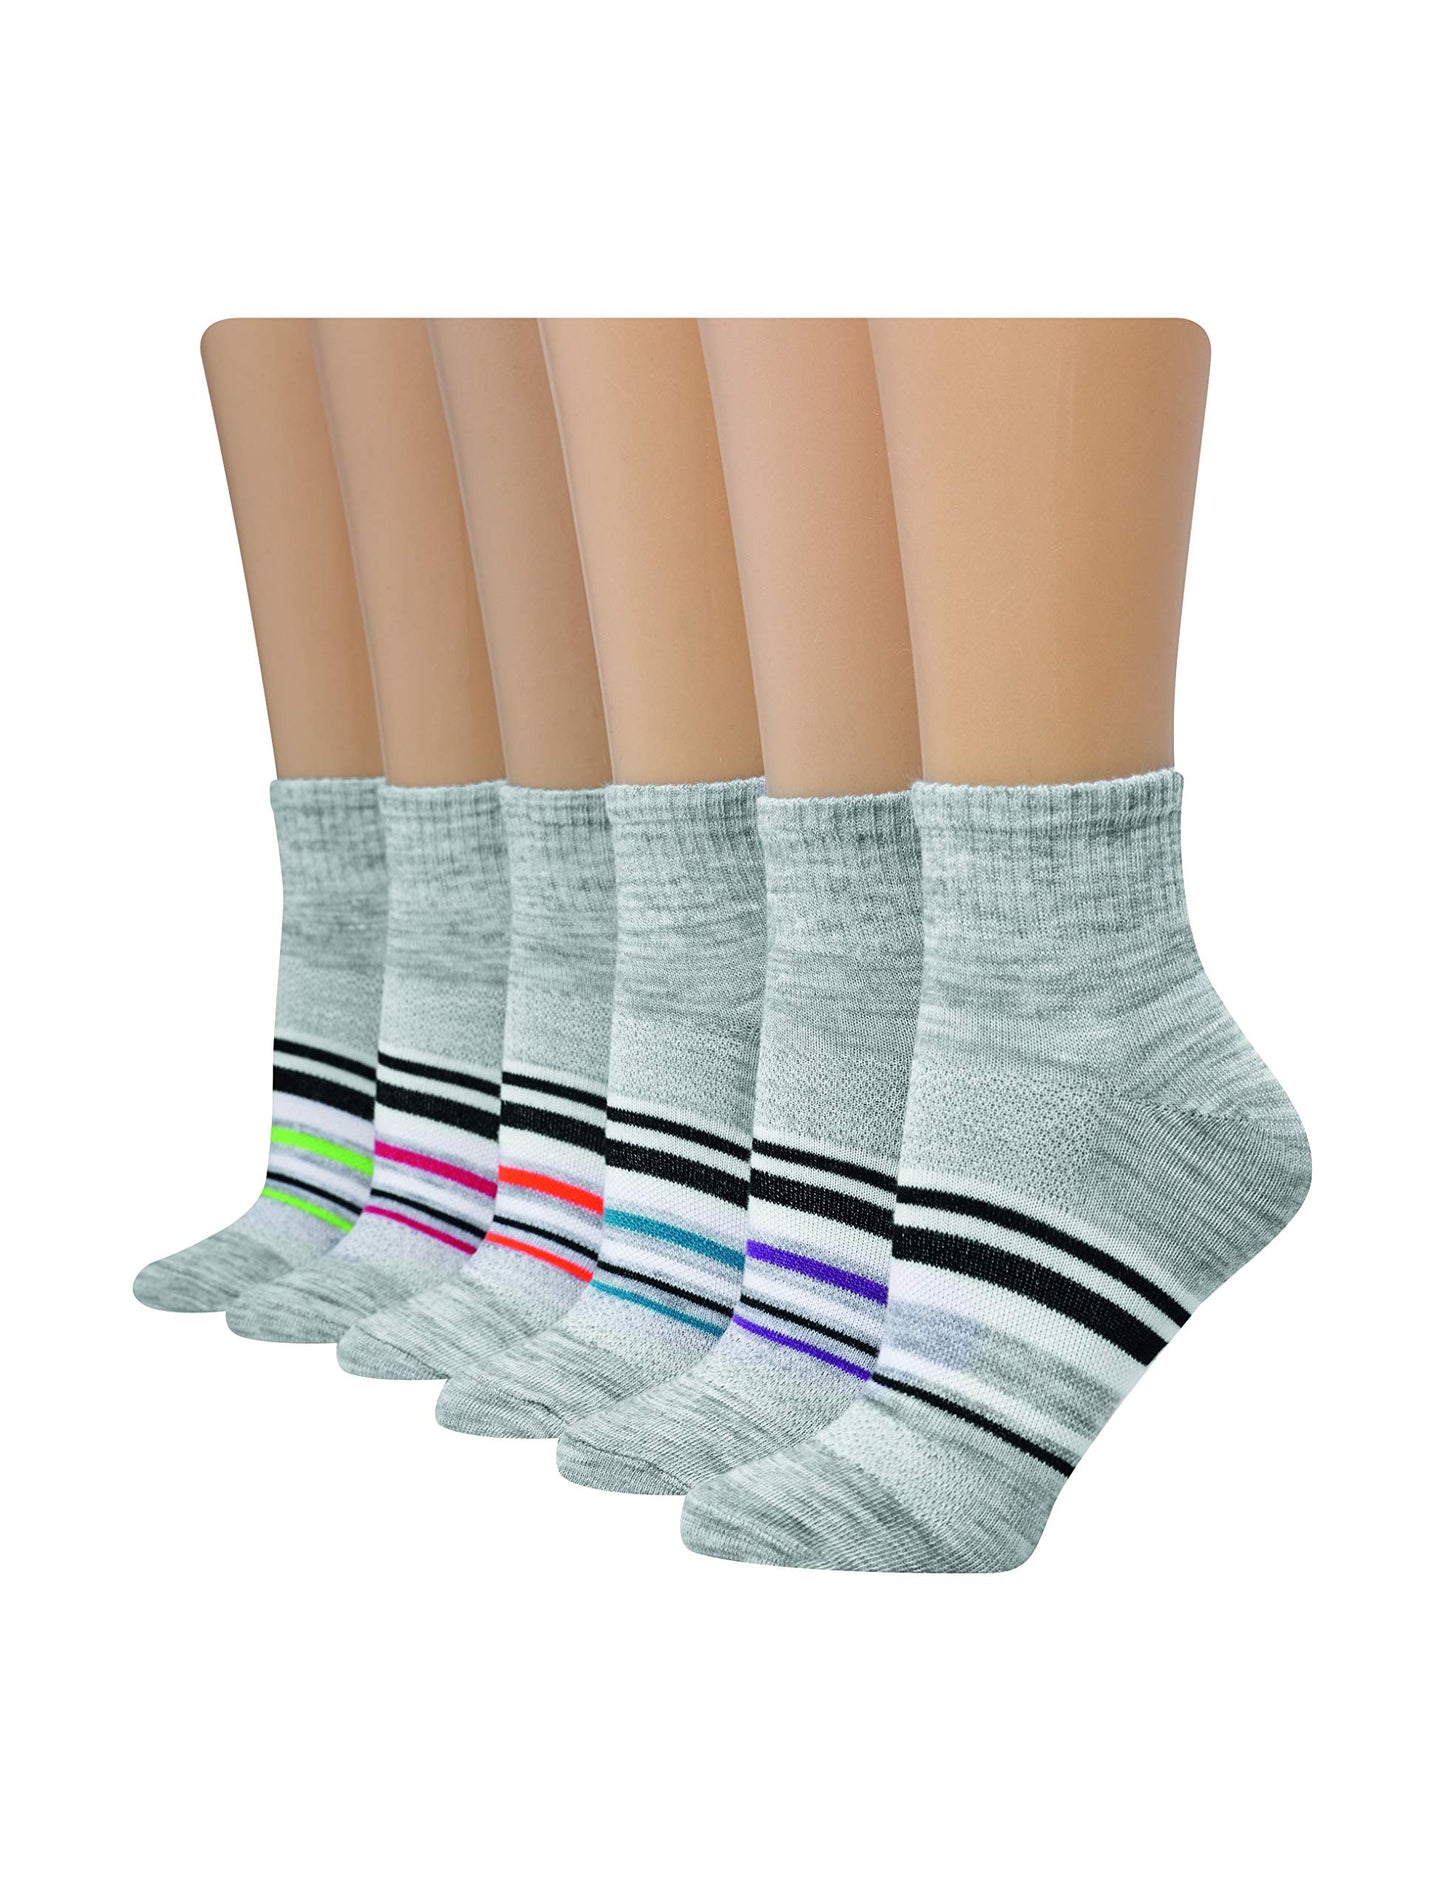 Hanes womens Hanes Women's 6-pair Lightweight Breathable Ventilation Ankle fashion liner socks, Black/Grey, 5 9 US